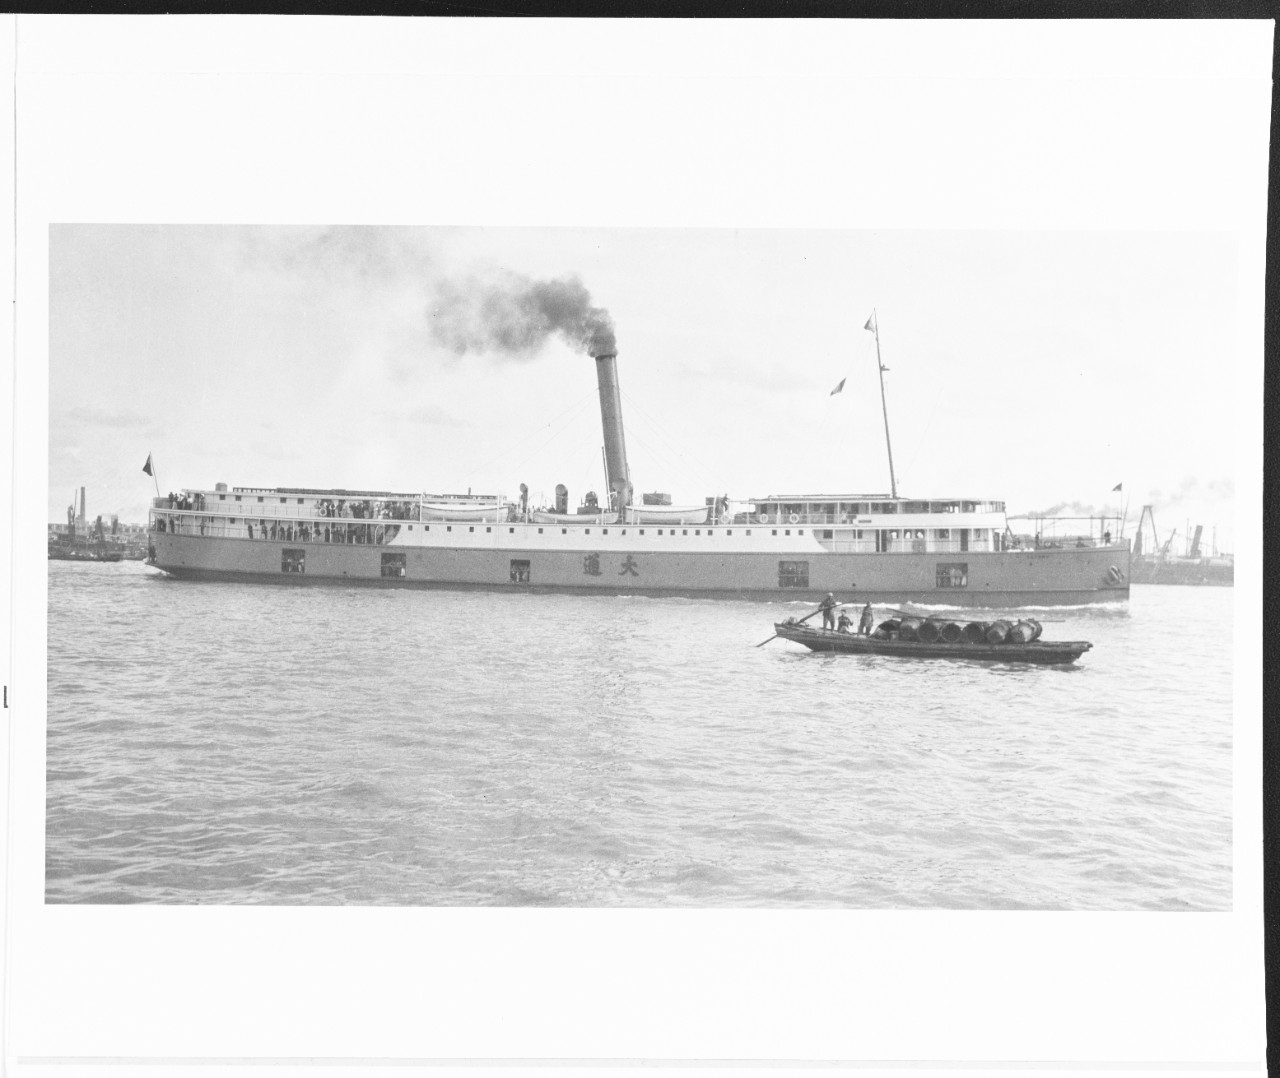 SS TATUNG (British river passenger ship, 1891-1936)